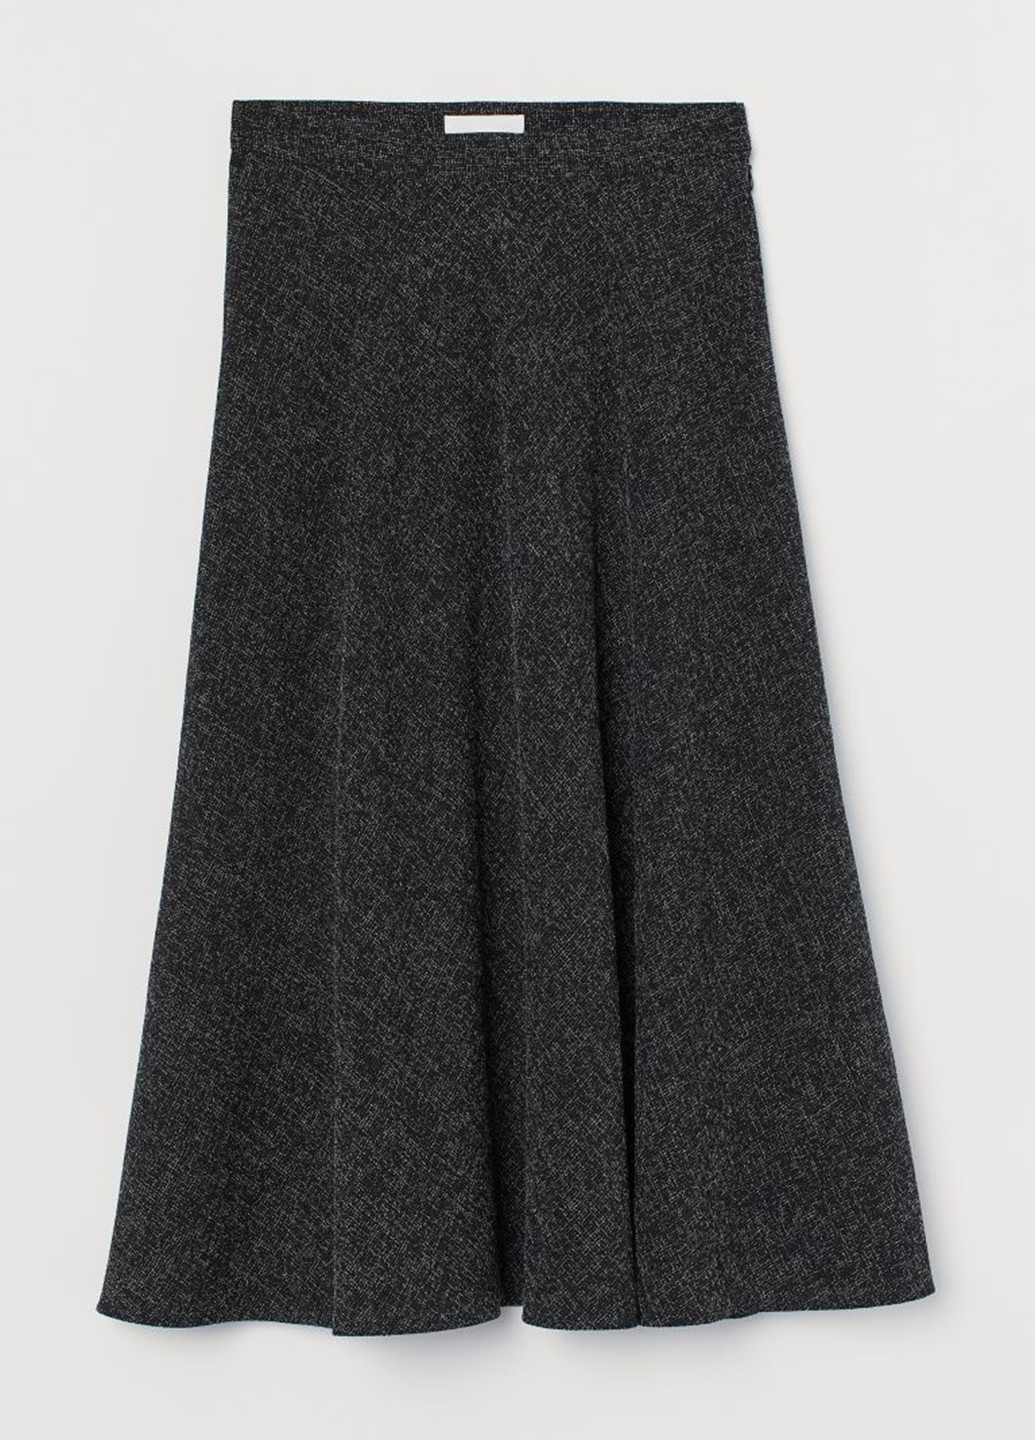 Темно-серая кэжуал меланж юбка H&M клешированная-солнце